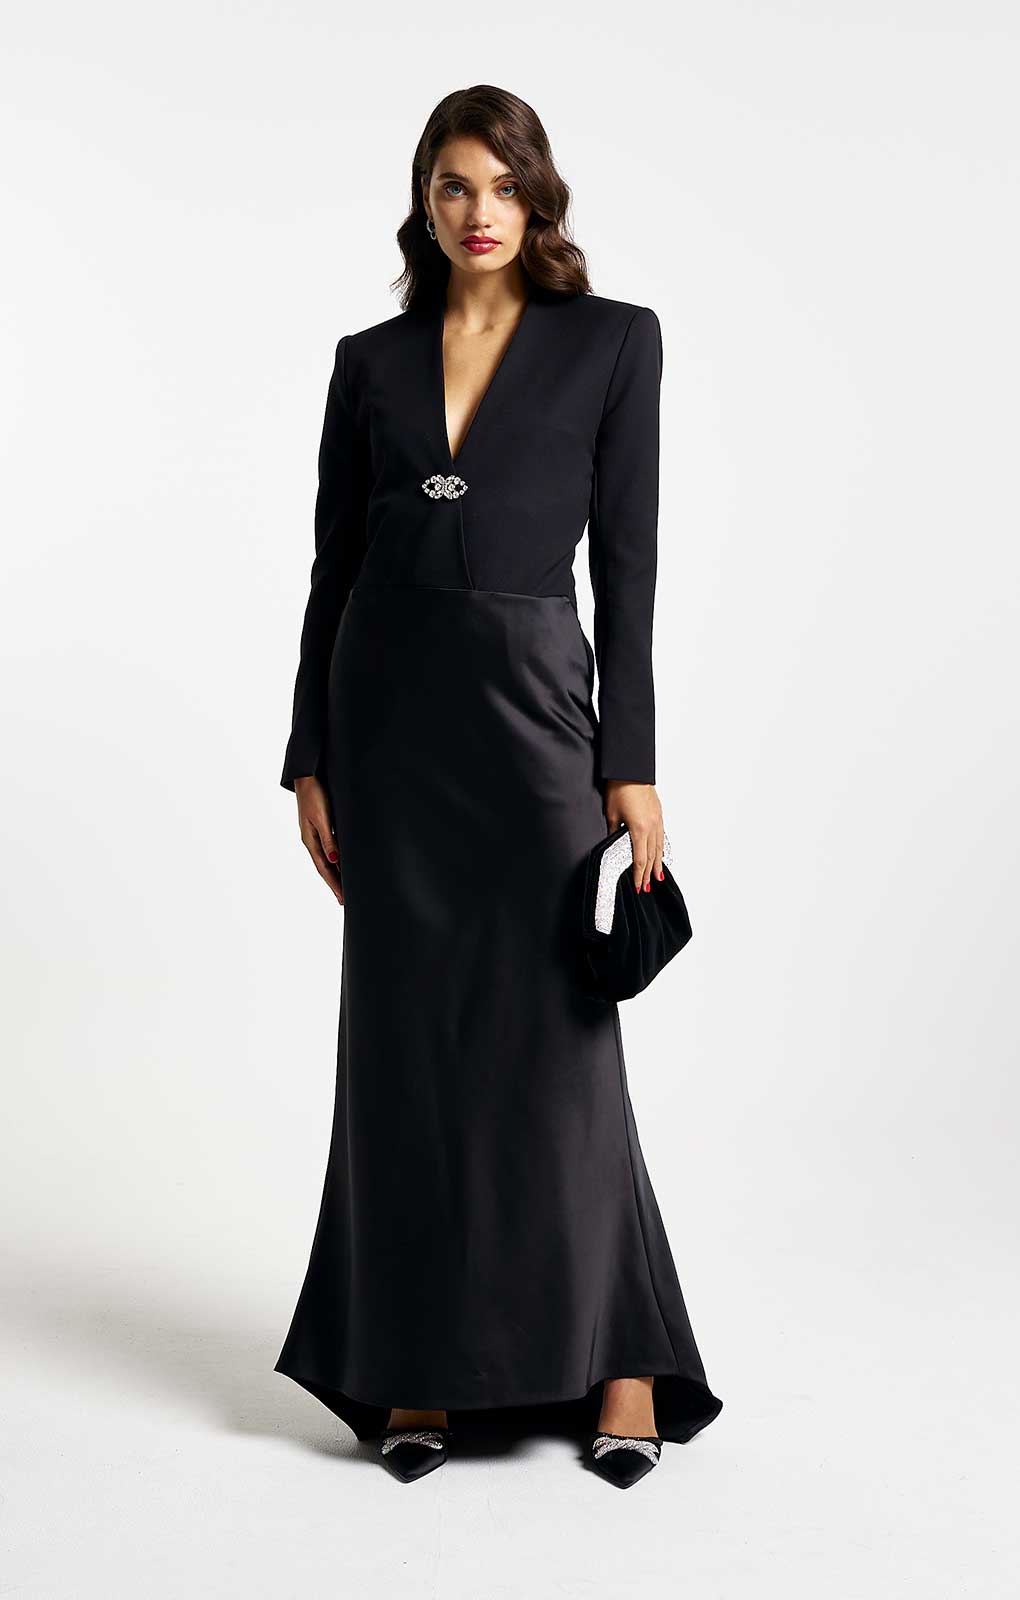 River Island Black Satin Tailored Maxi Dress product image